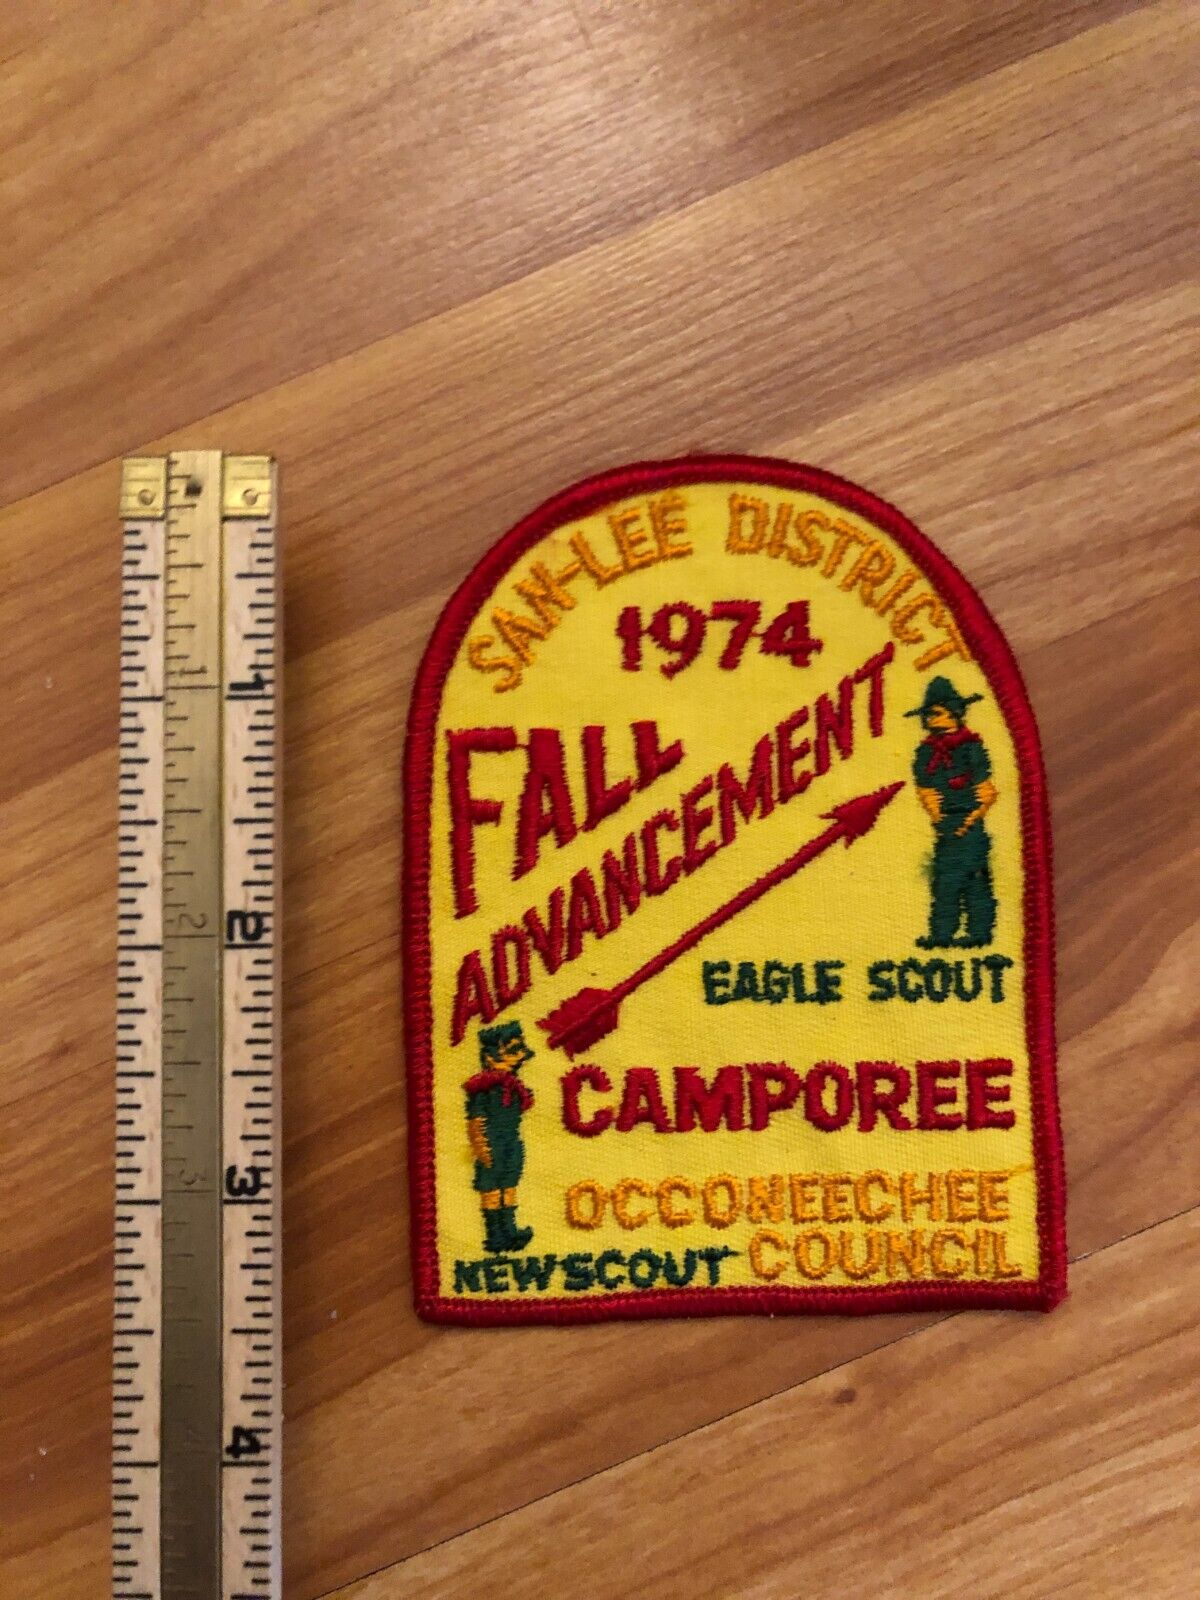 Boy Scout Patch San Lee District Eagle Scout 1974 Camporee Fall Advancement